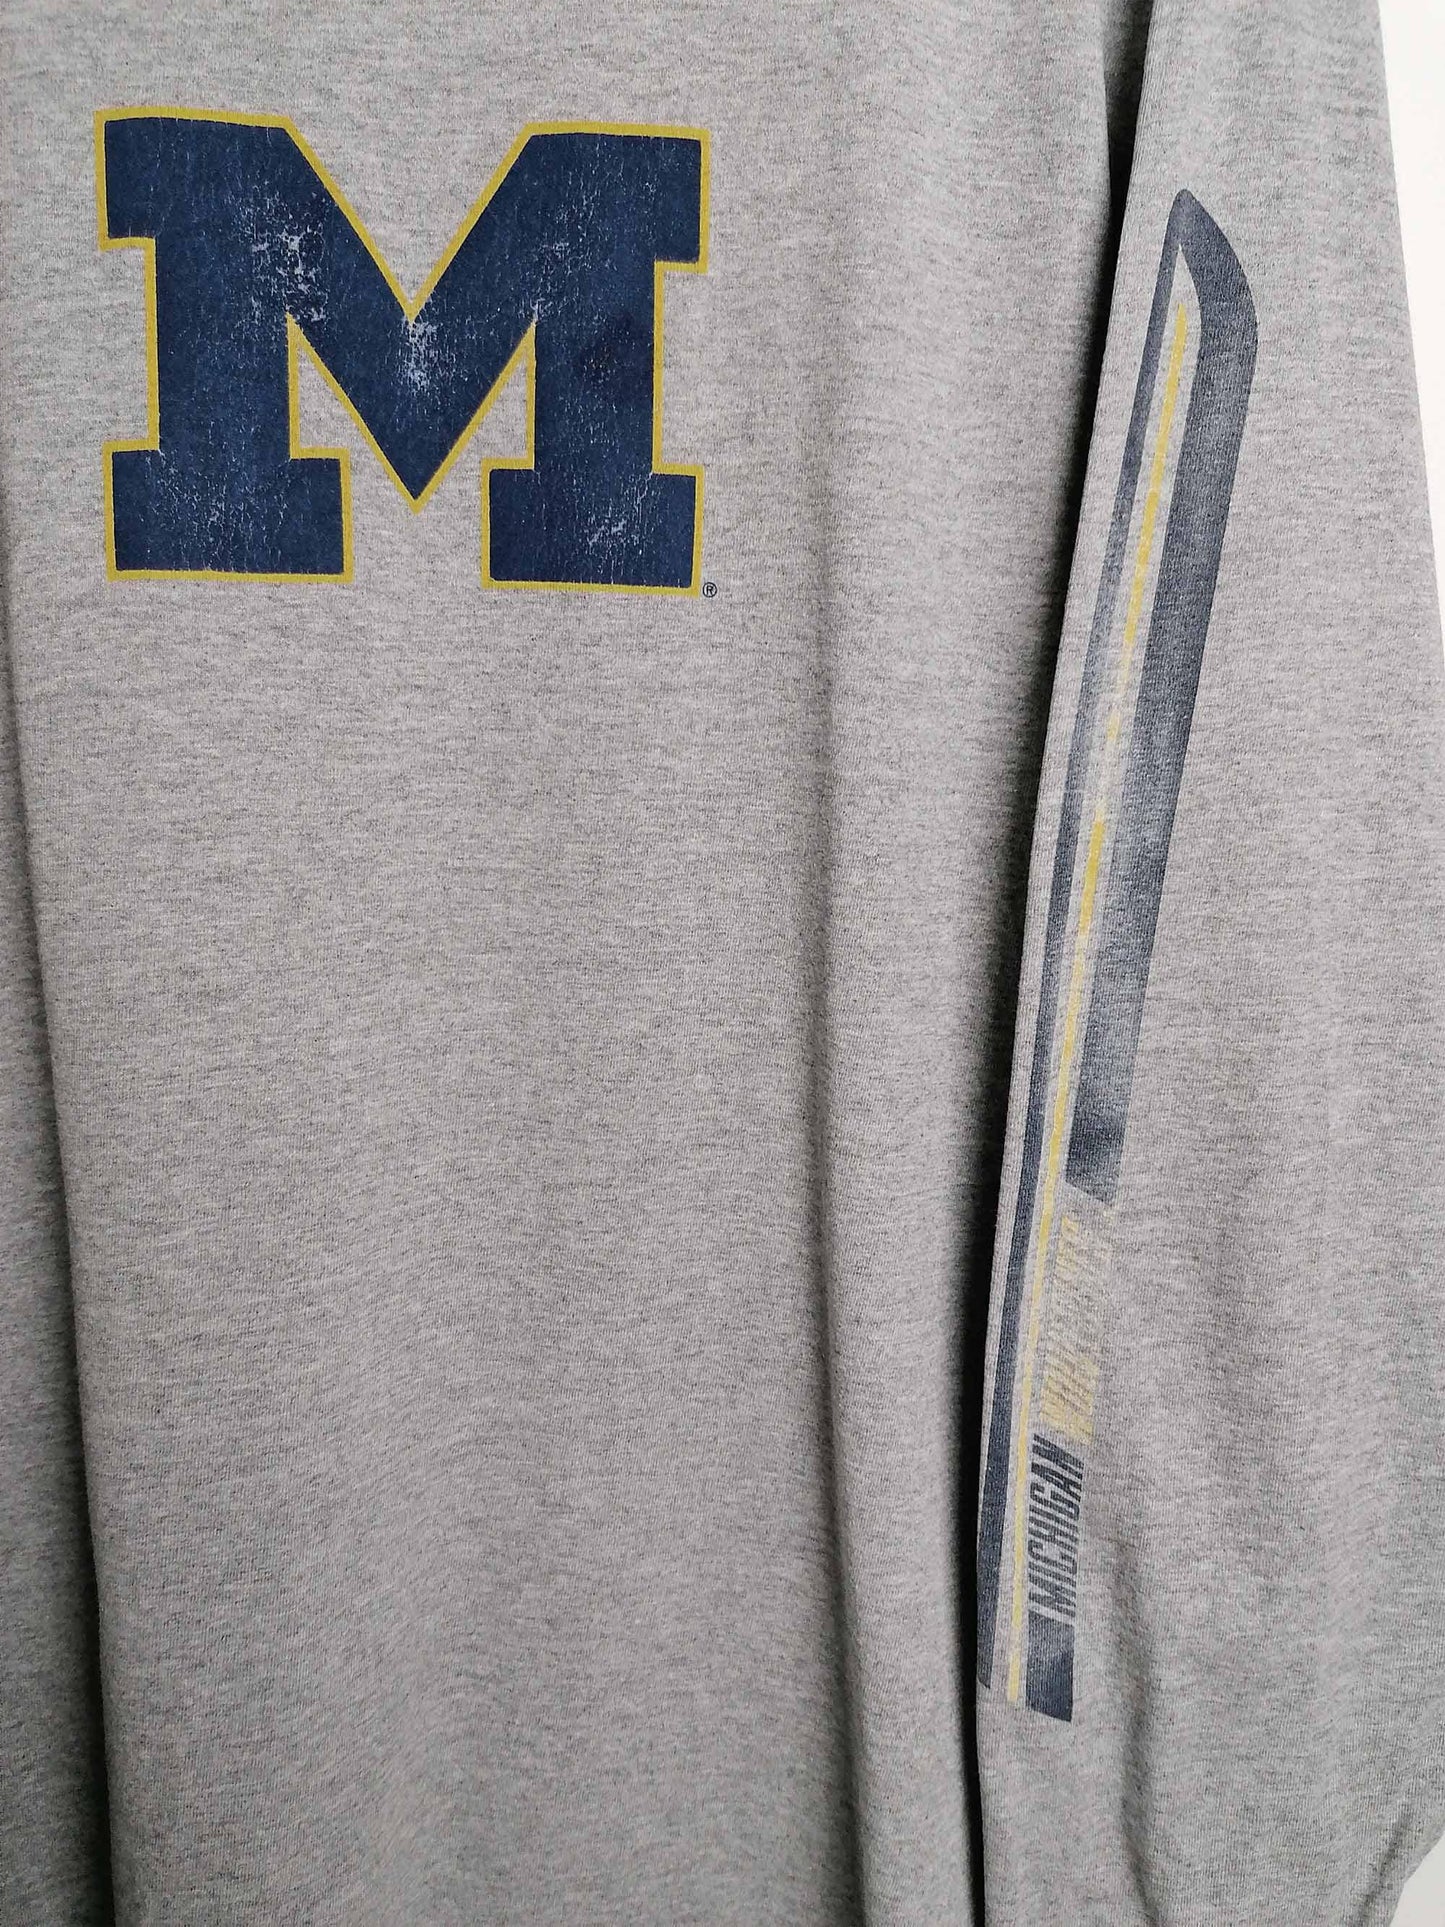 NIKE TEAM Michigan Wolverines Long Sleeve T-shirt - size XL